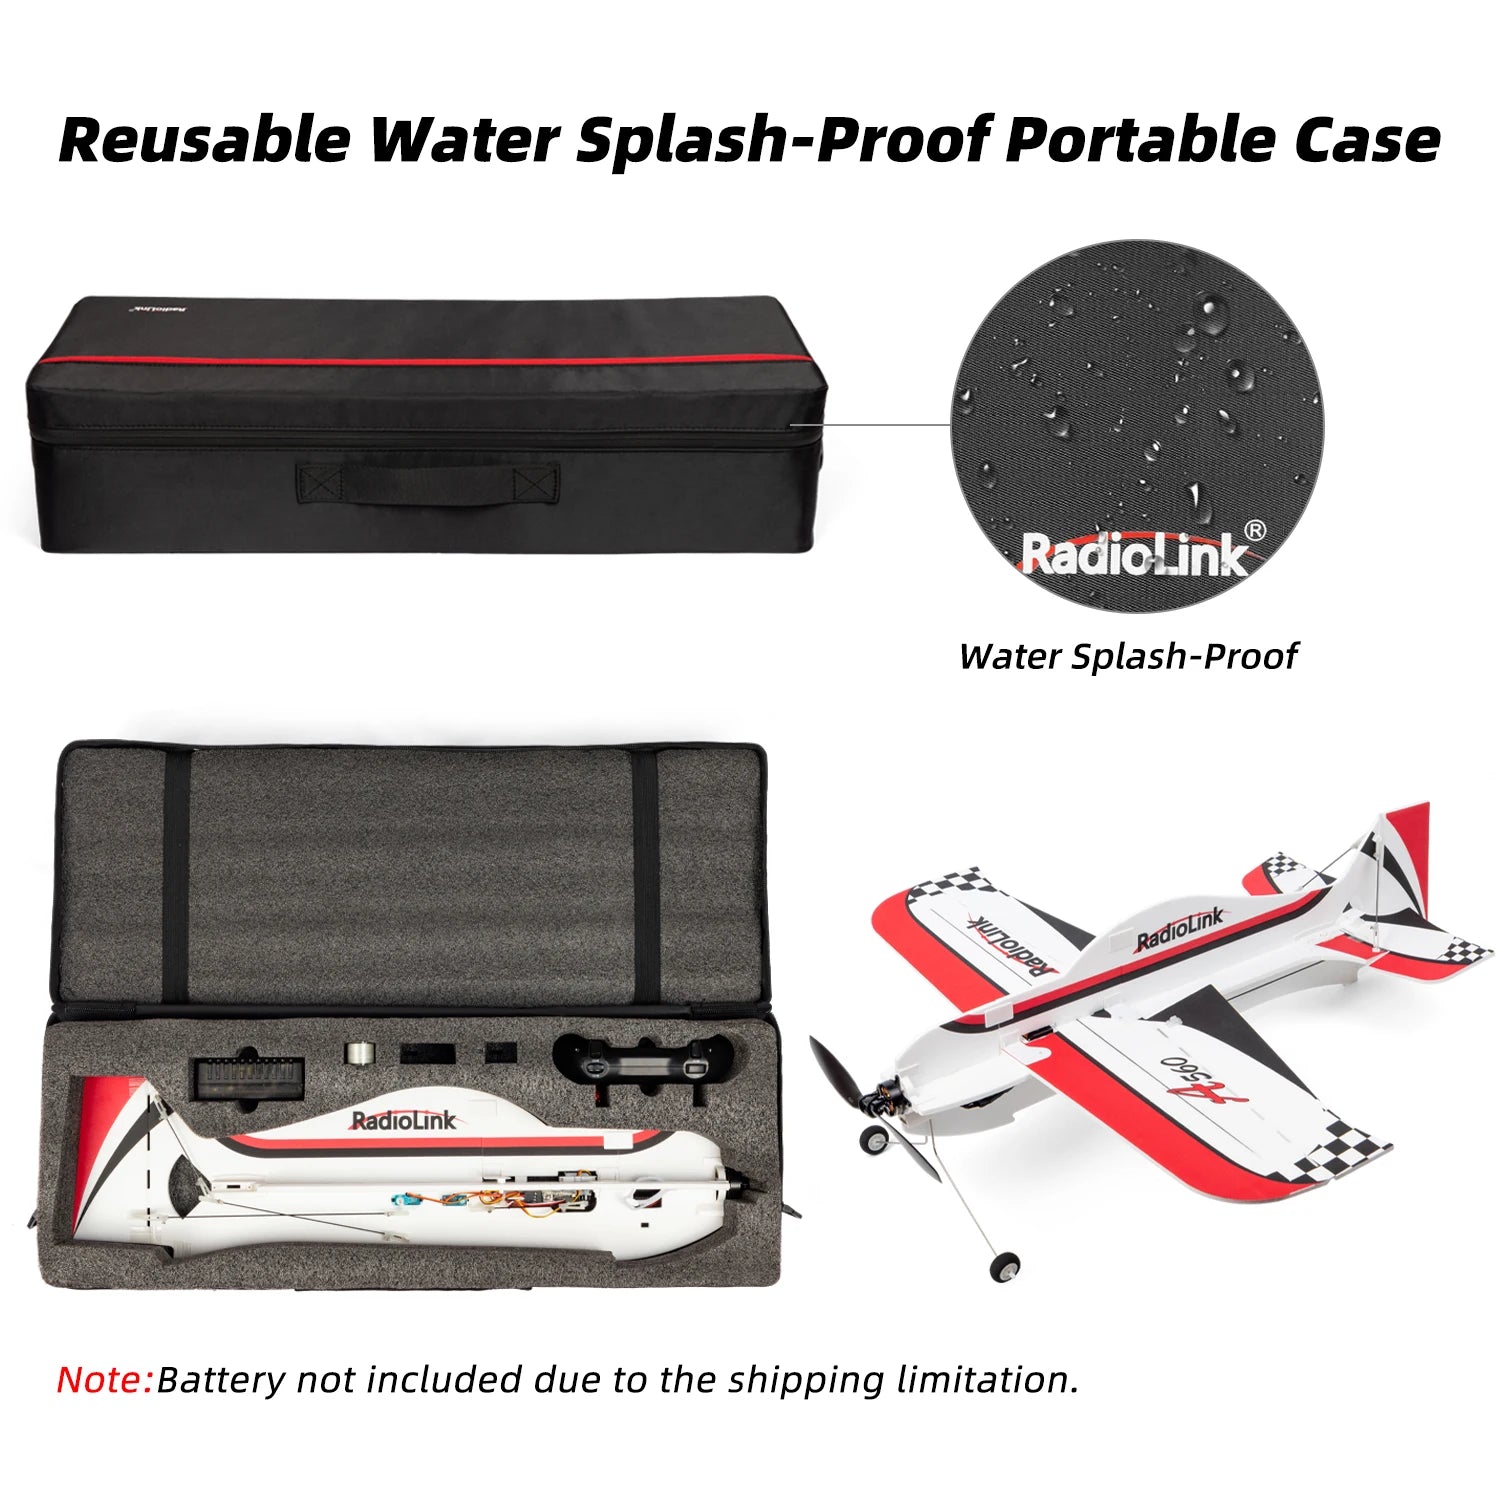 Radiolink A560 Airplane, Reusable Water Splash-Proof Portable Case RadioLink Yunoipey"